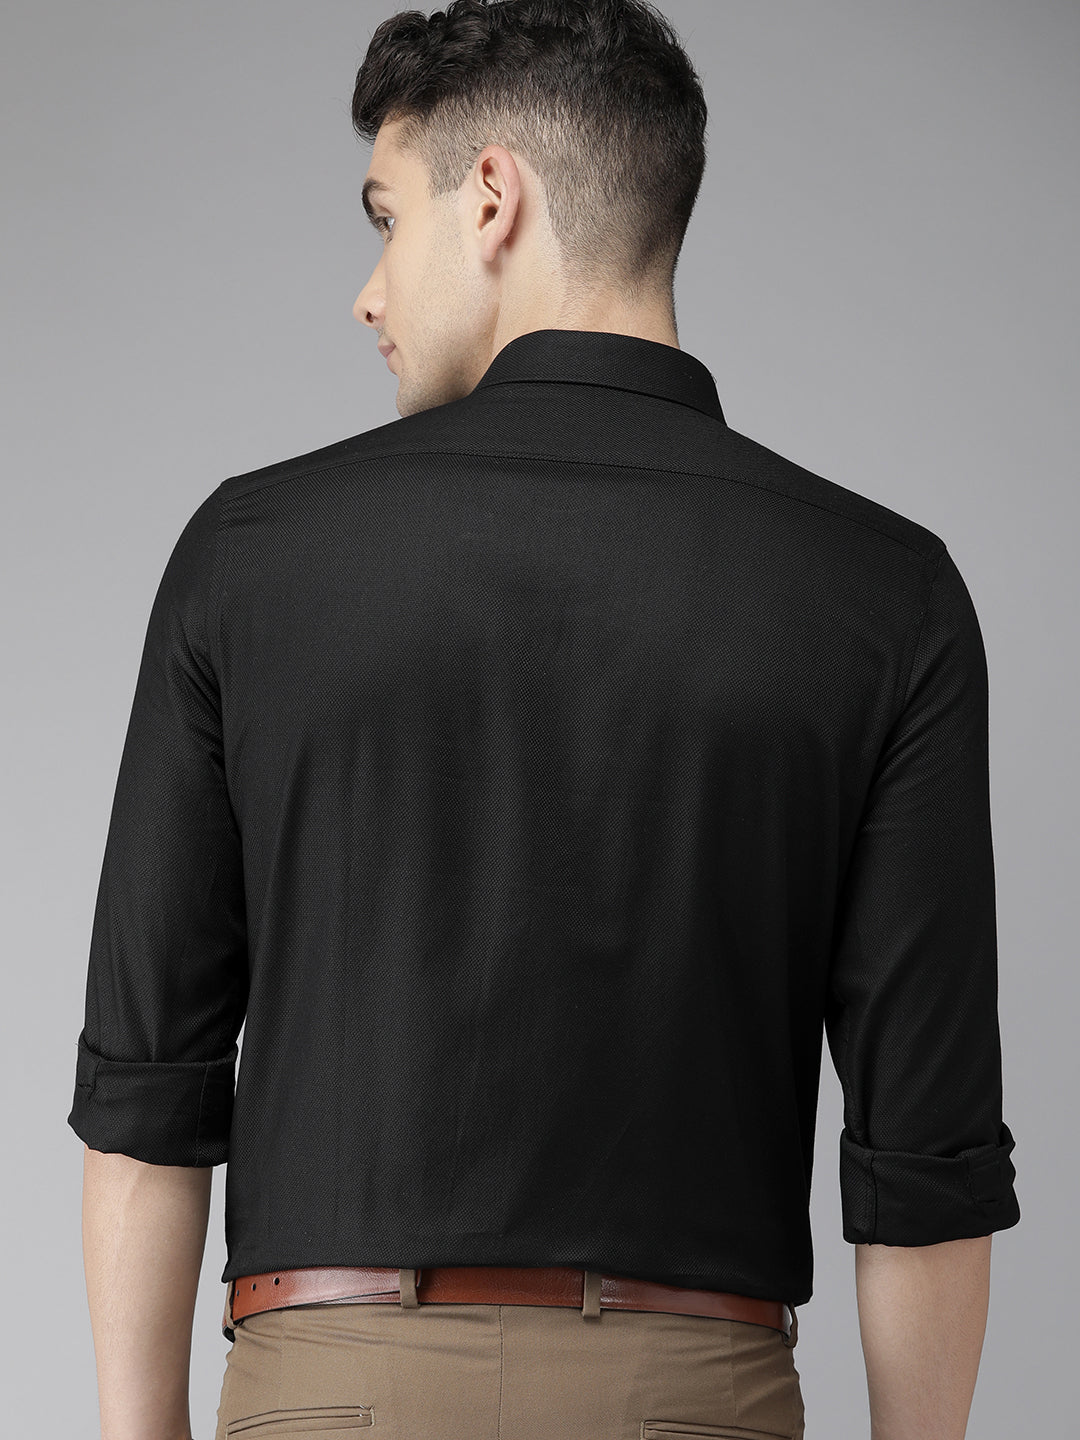 Black Cotton Self Design Slim Fit Shirts